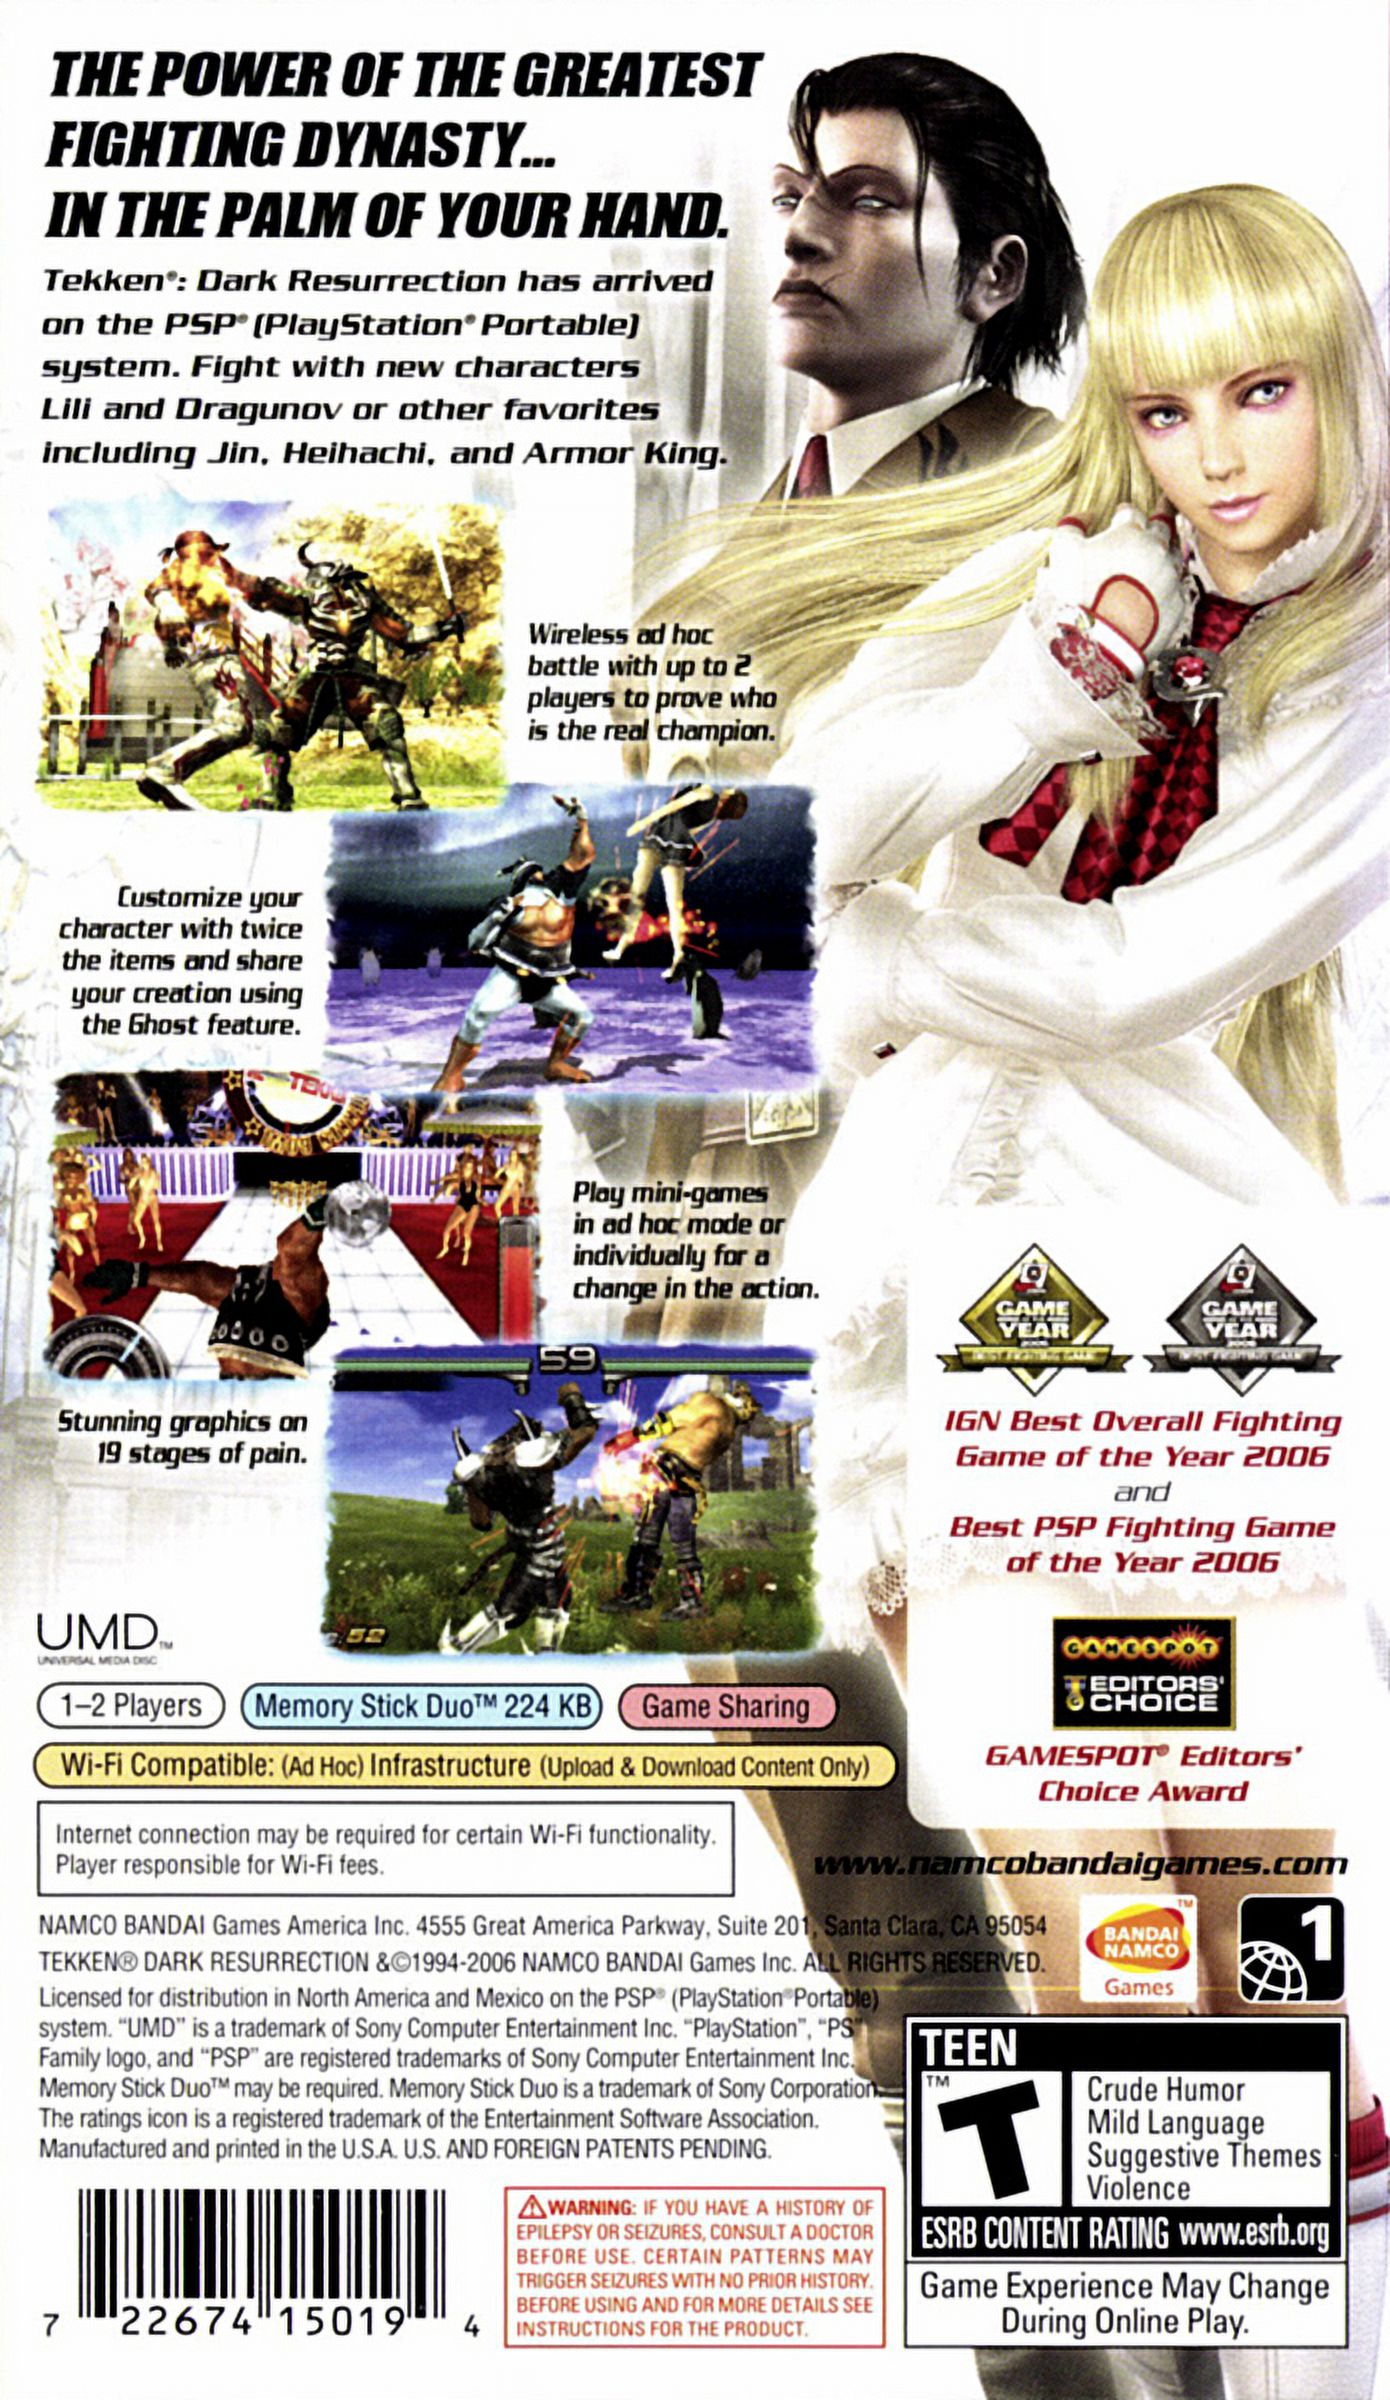 Tekken Dark Resurrection - PlayStation Portable - image 2 of 12